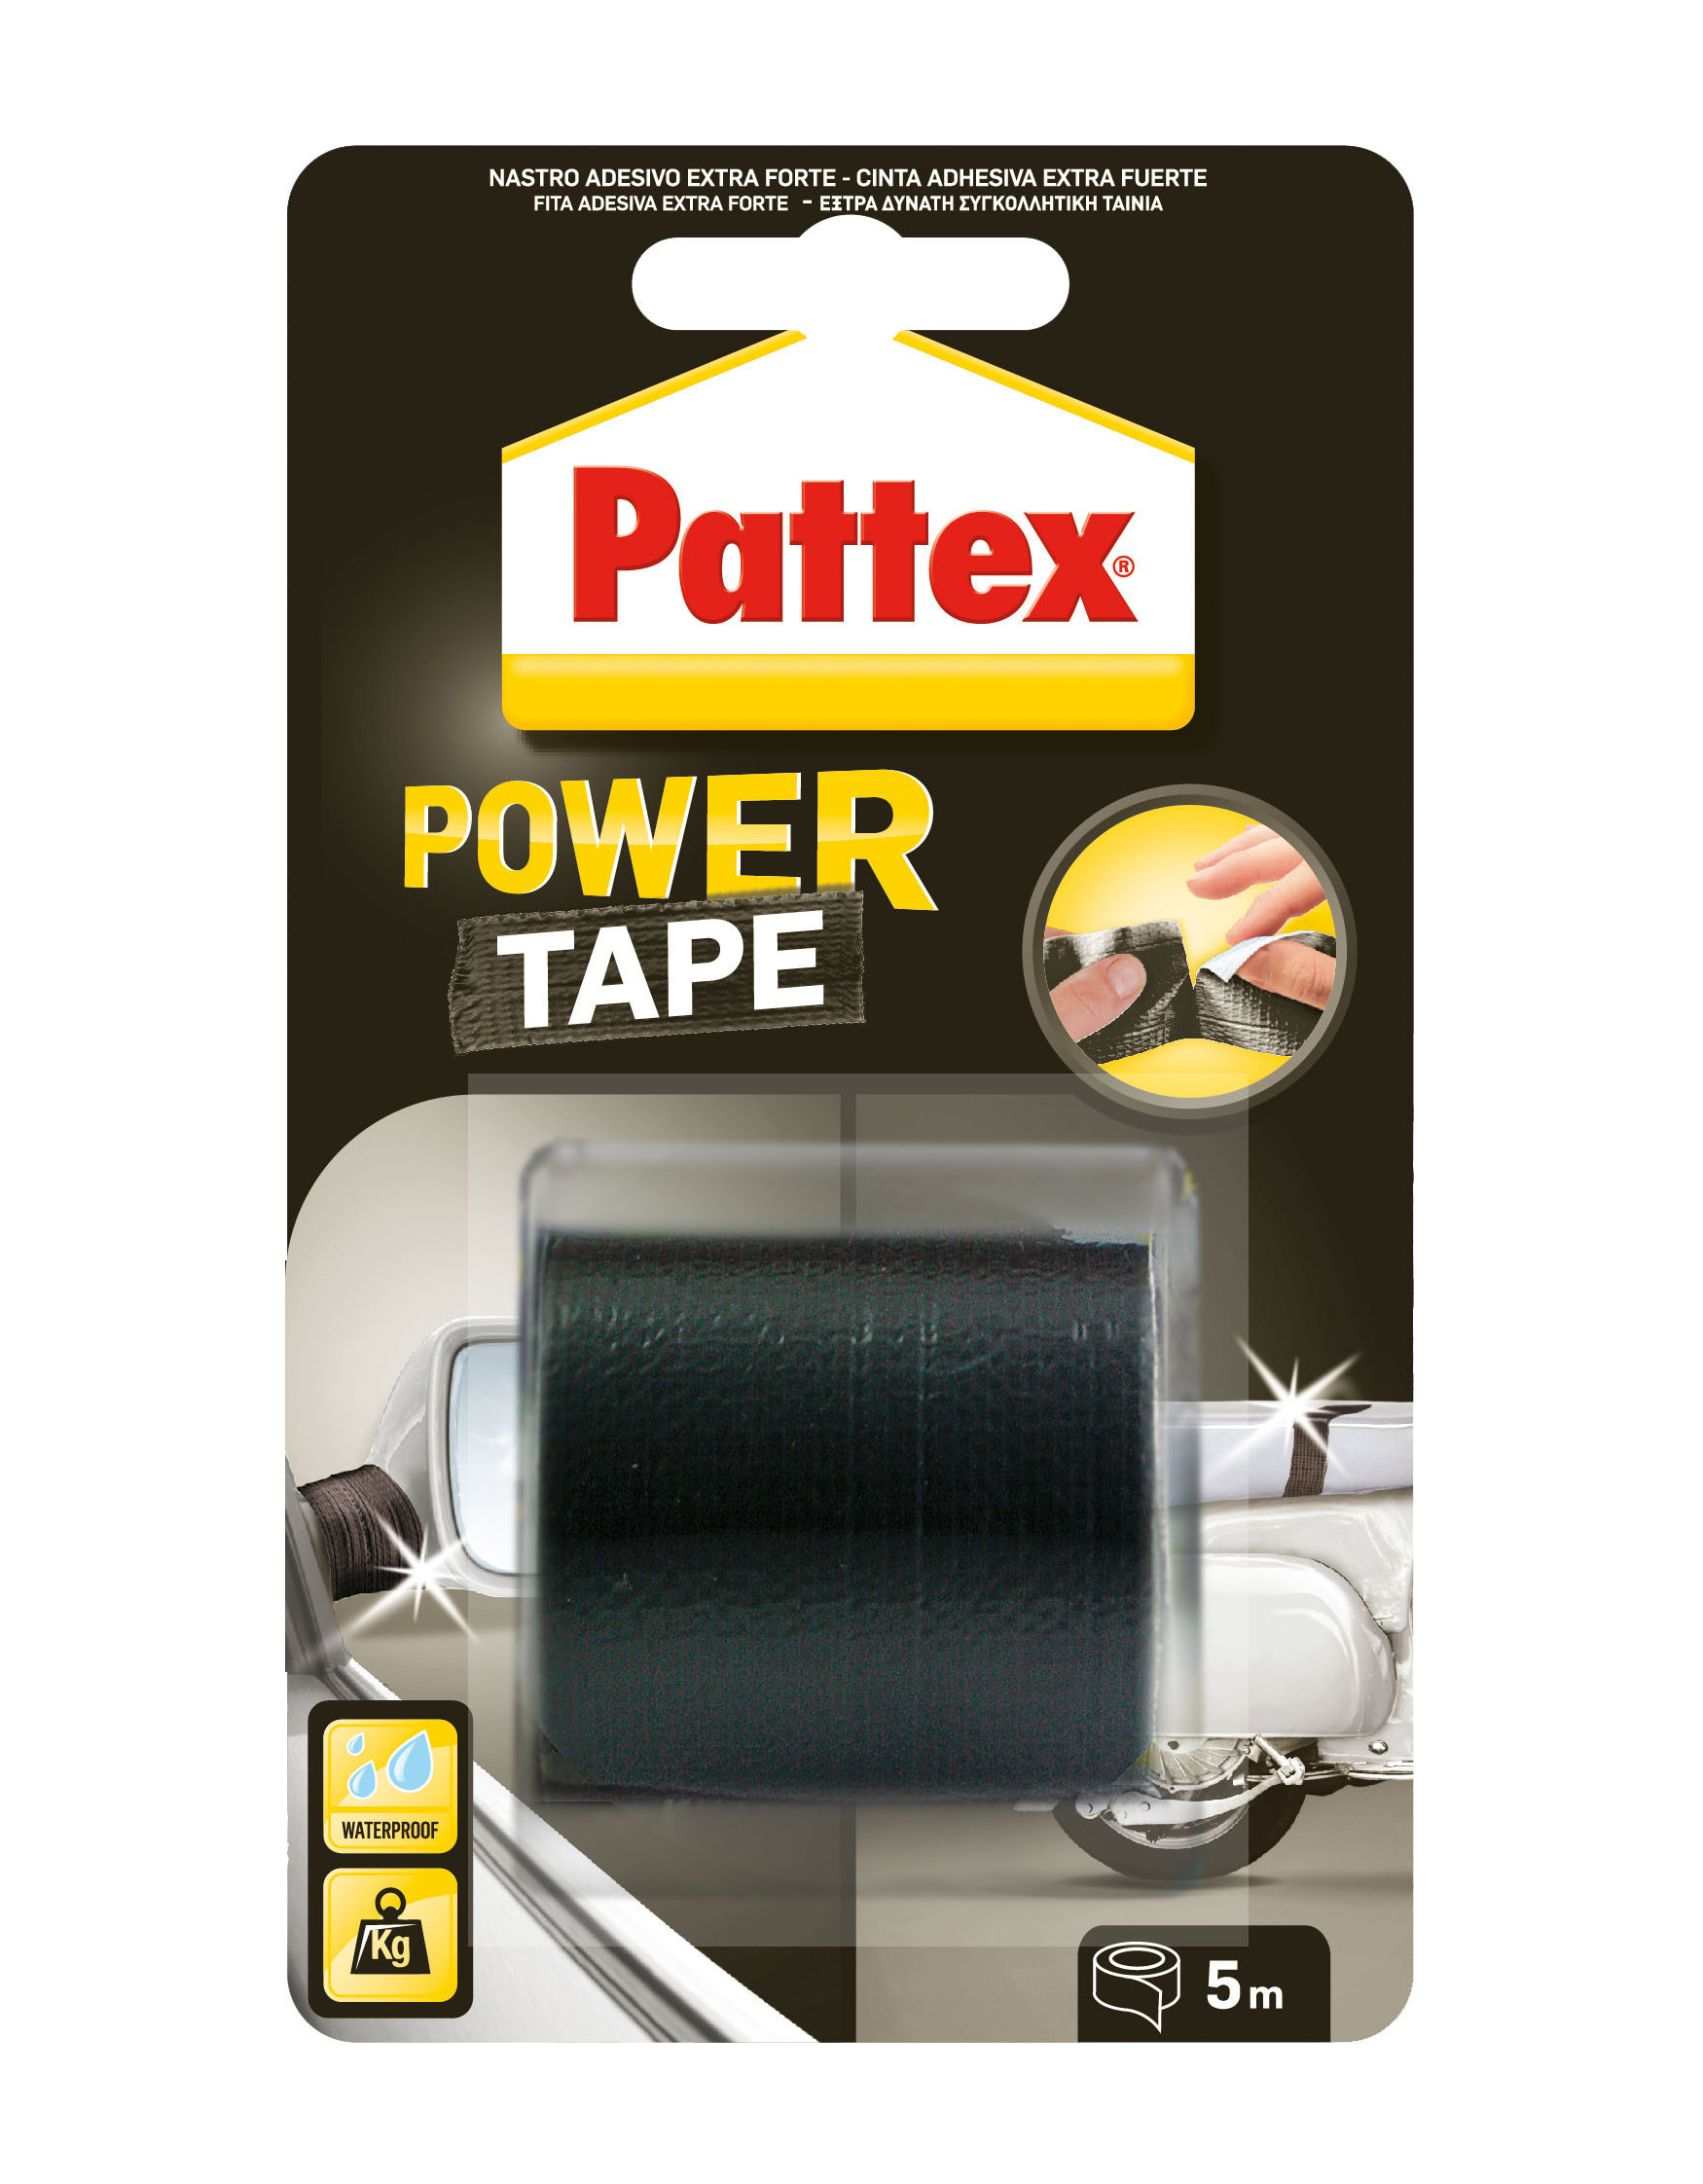 Pattex power tape nero 5m